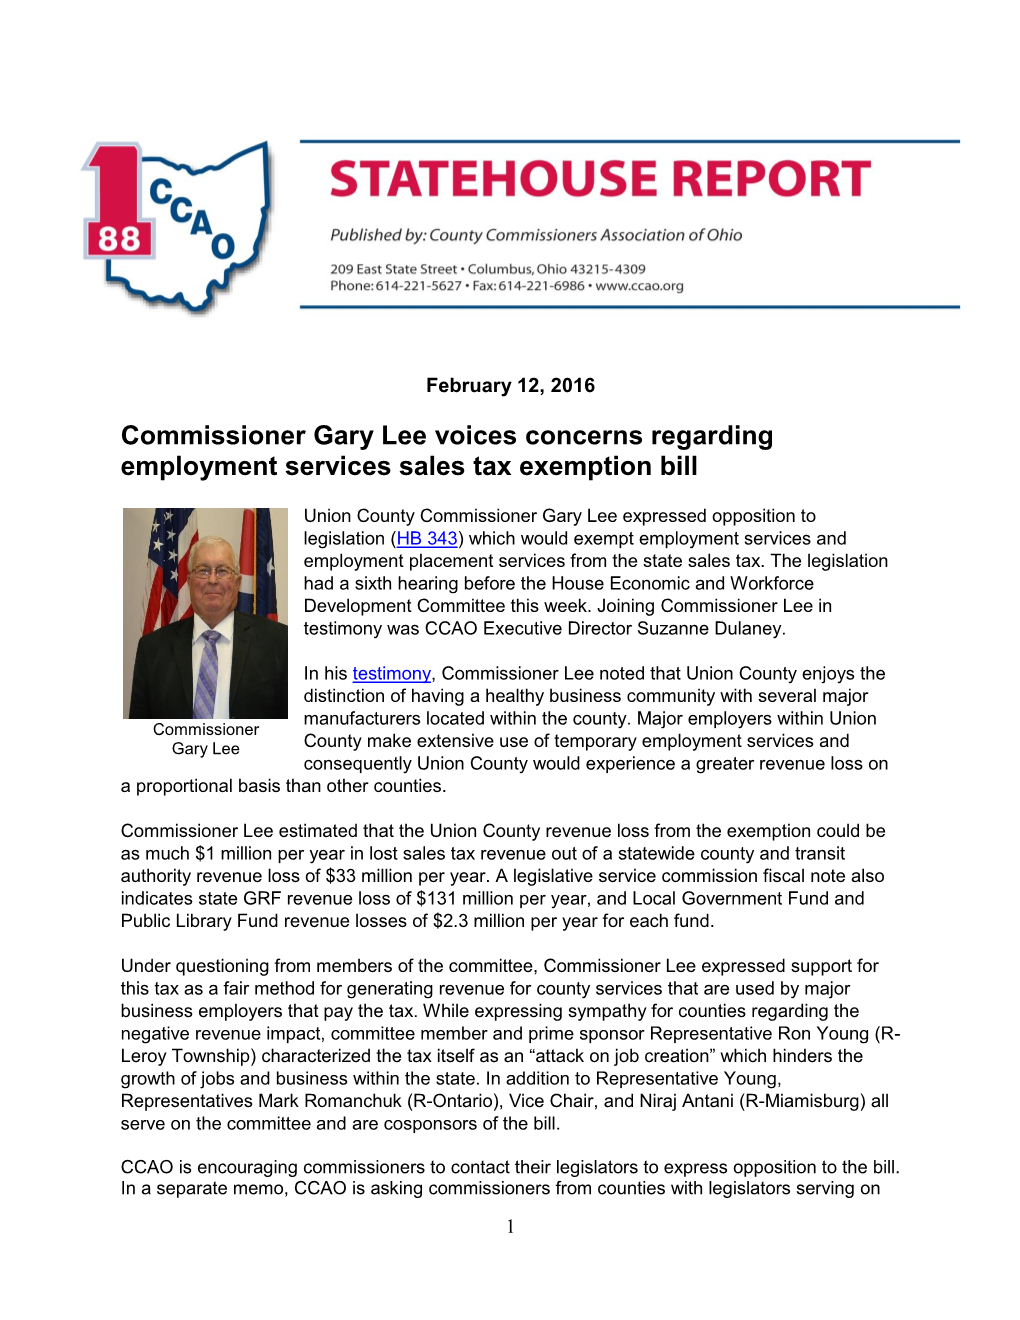 Commissioner Gary Lee Voices Concerns Regarding Employment Services Sales Tax Exemption Bill